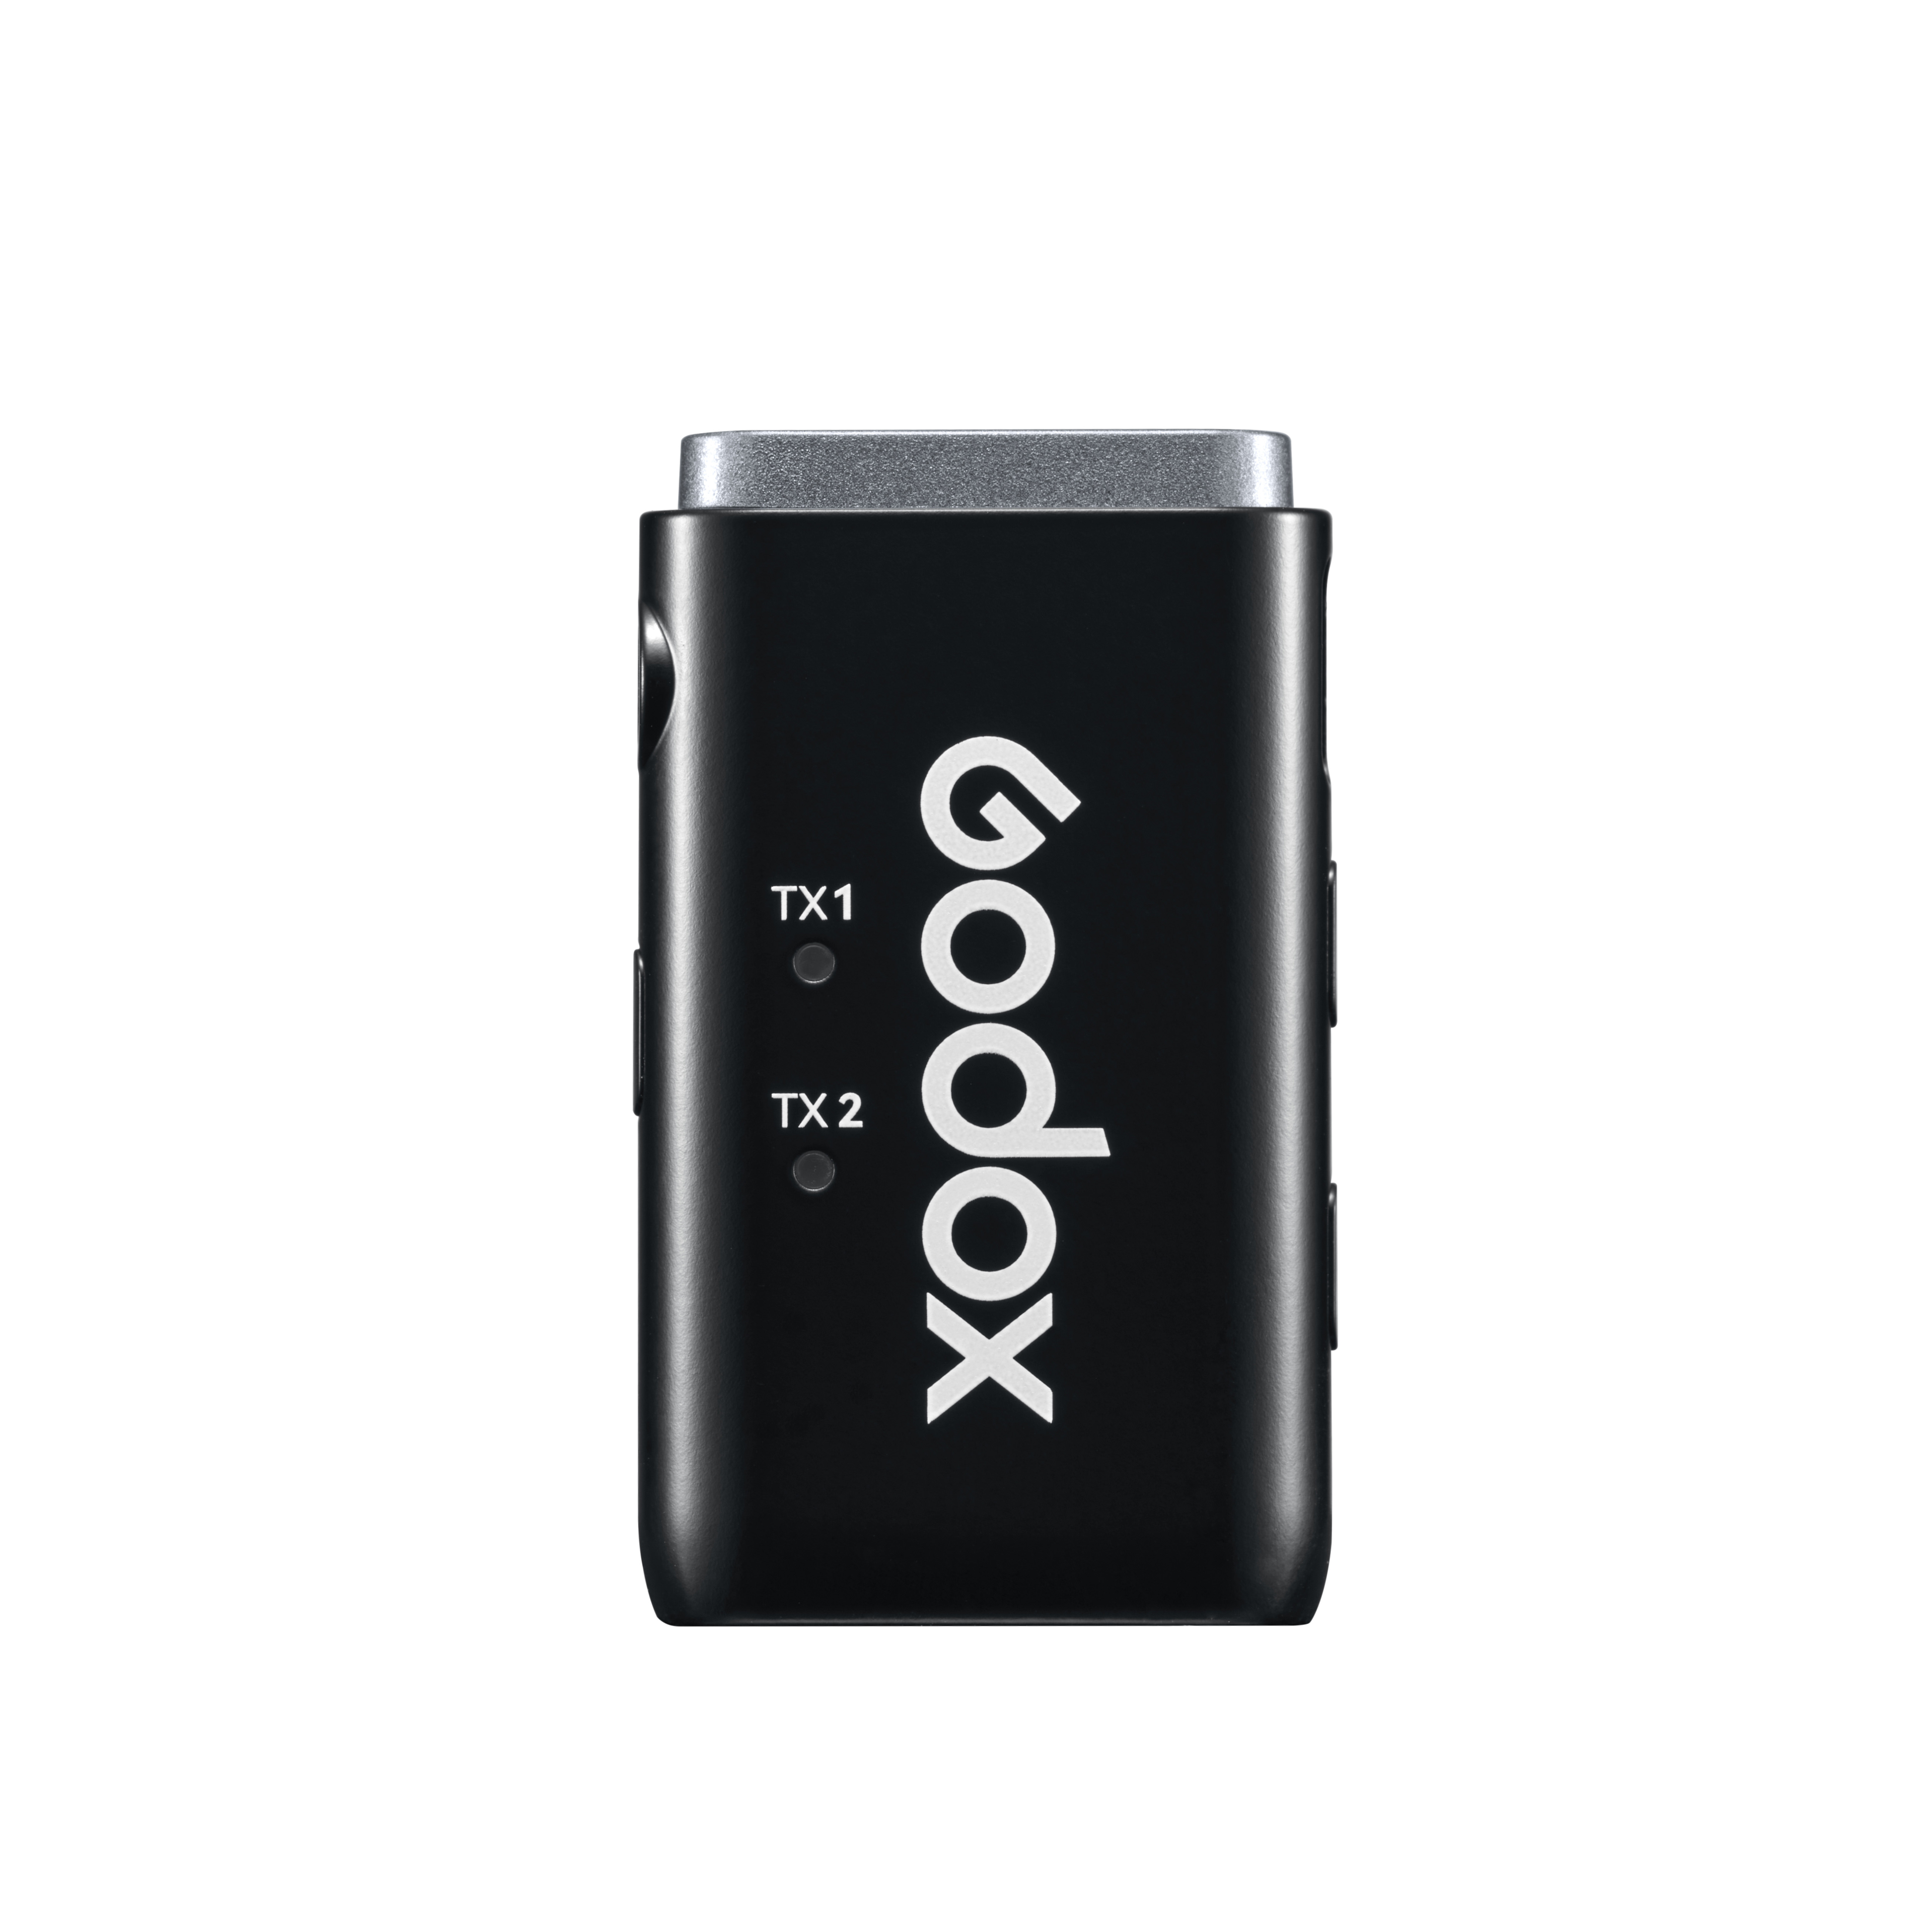   Godox WEC Kit2    Ultra-mart